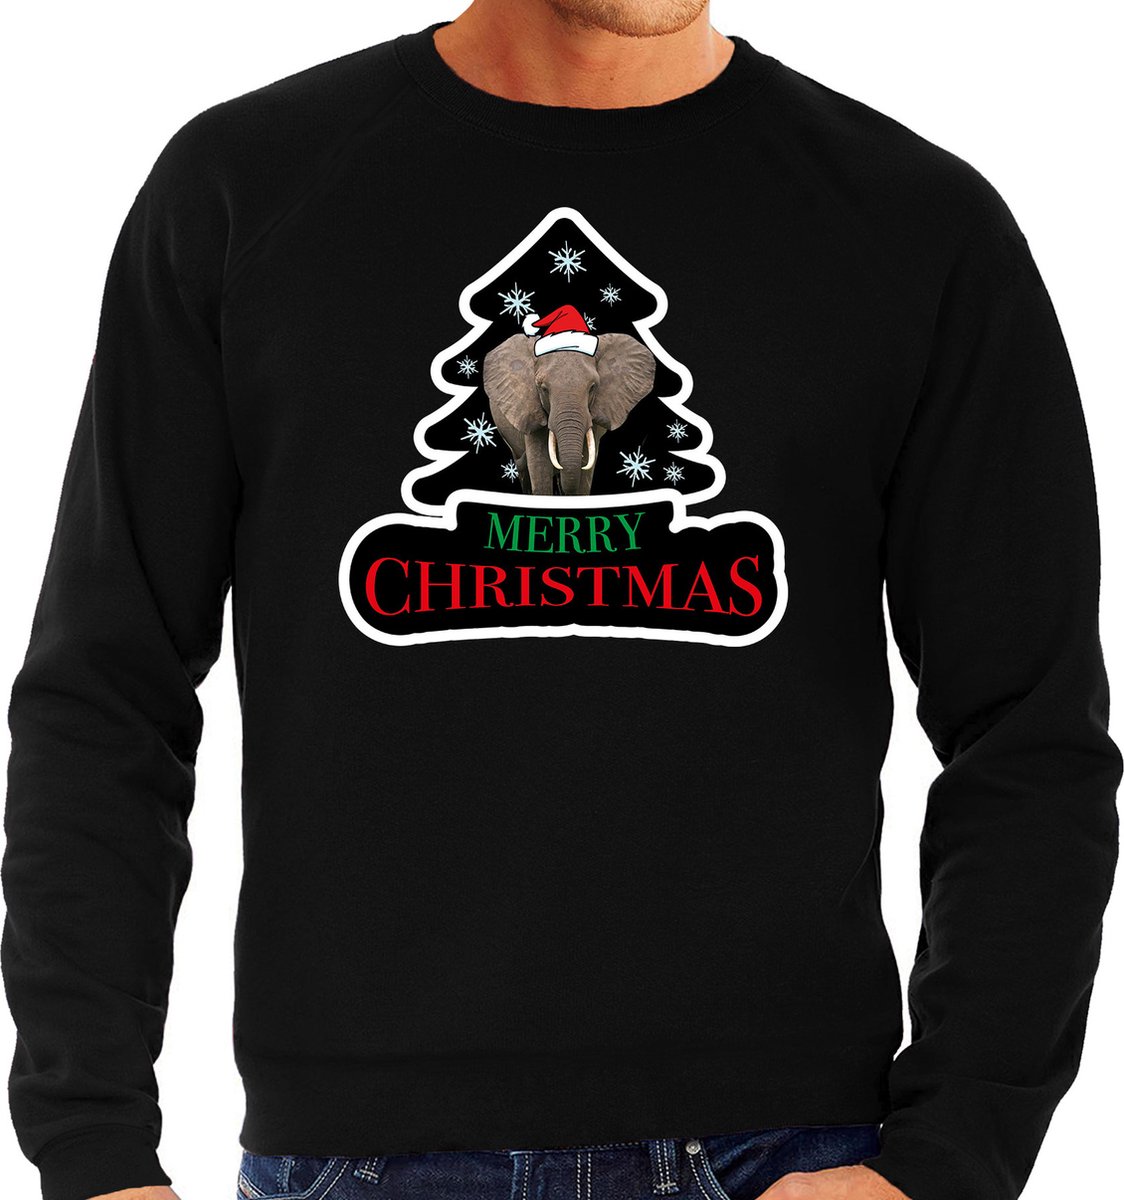 Dieren kersttrui olifant zwart heren - Foute olifanten kerstsweater - Kerst outfit dieren liefhebber S